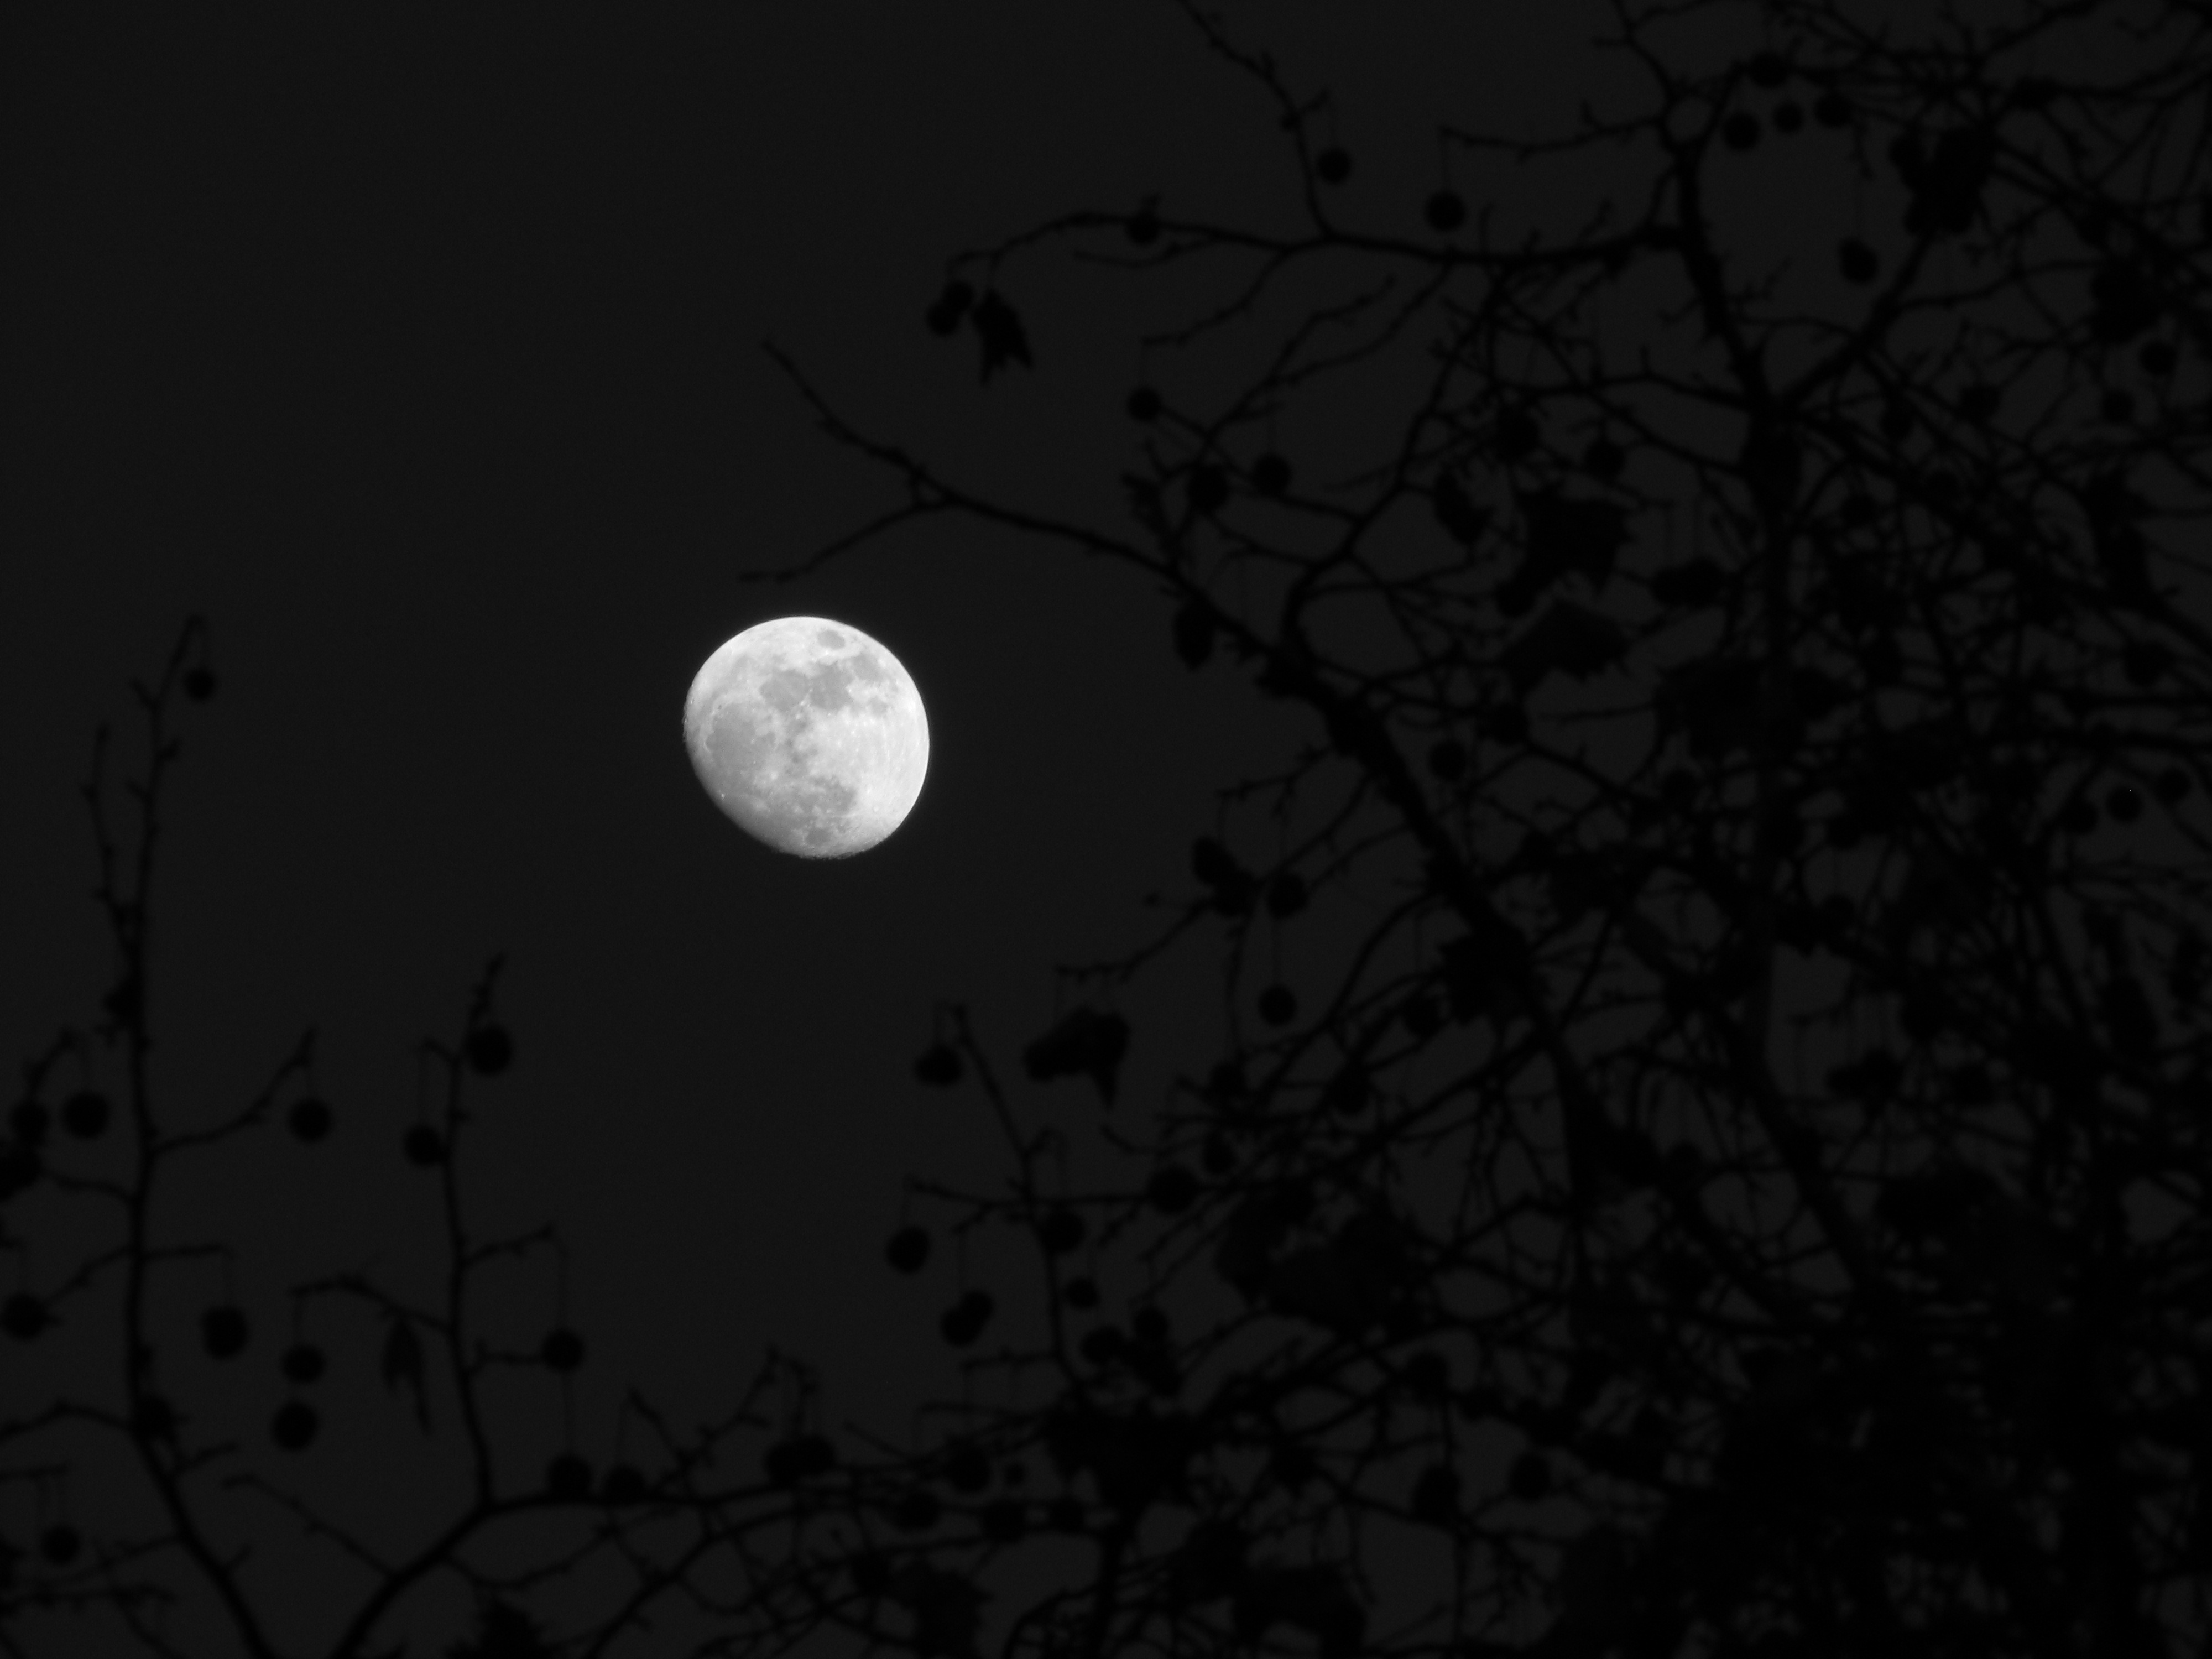 Moon Wood free image download